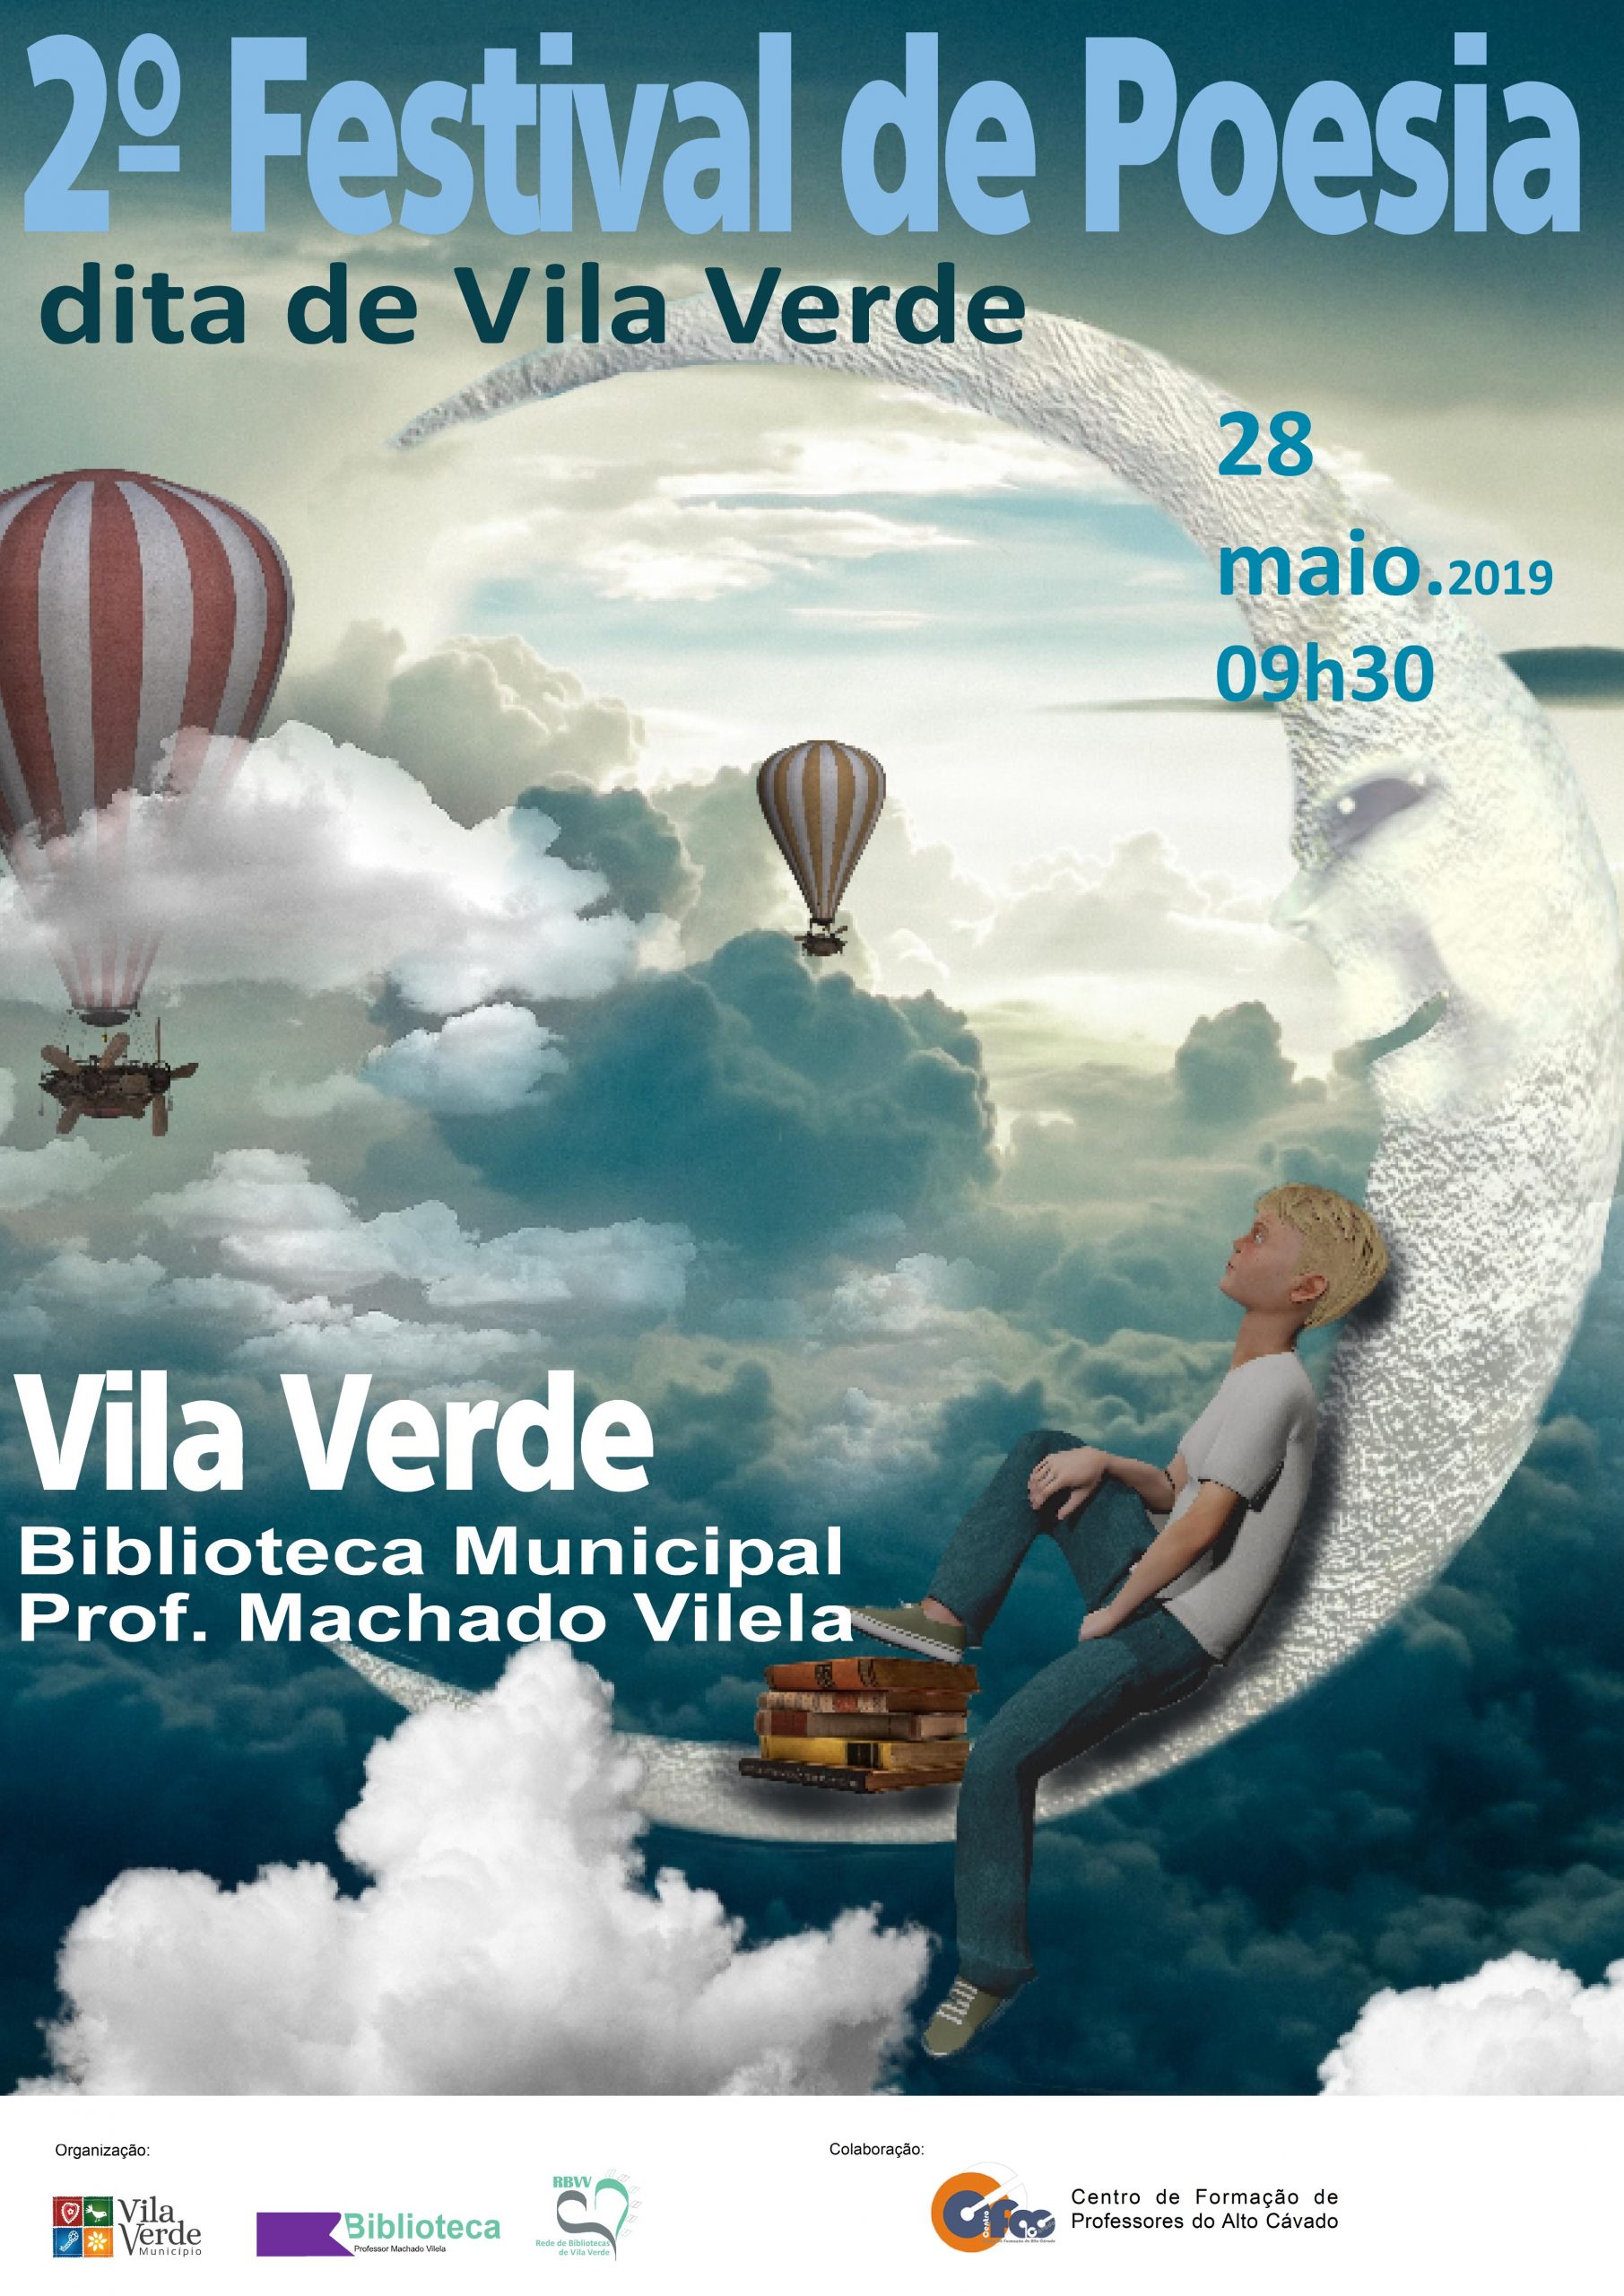 498583_BibliotecadevilaVerdecartazfestivalpoesiafinal